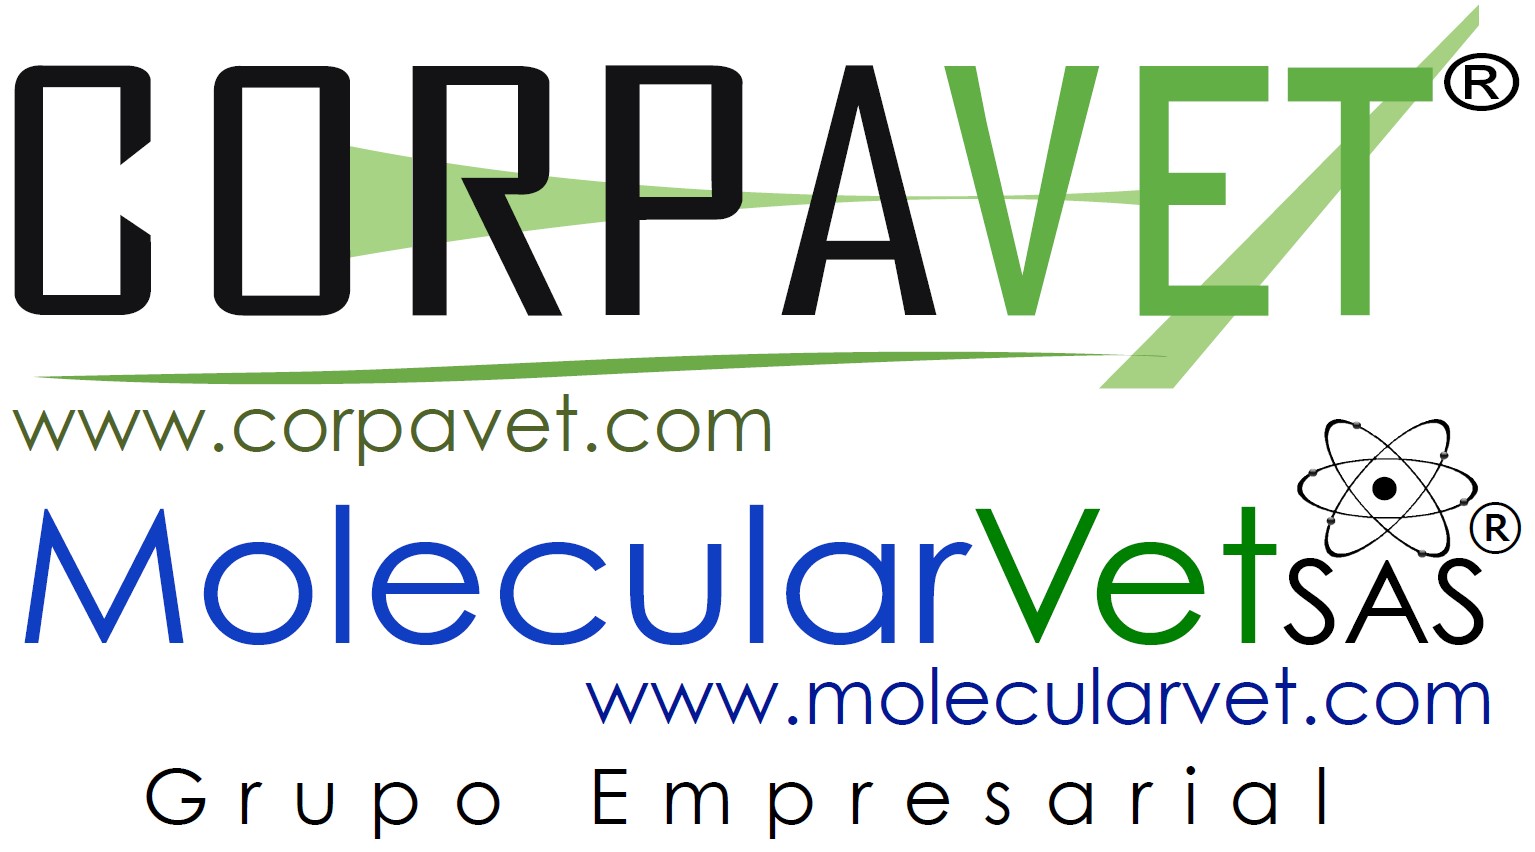 Corpavet - Molecularvet